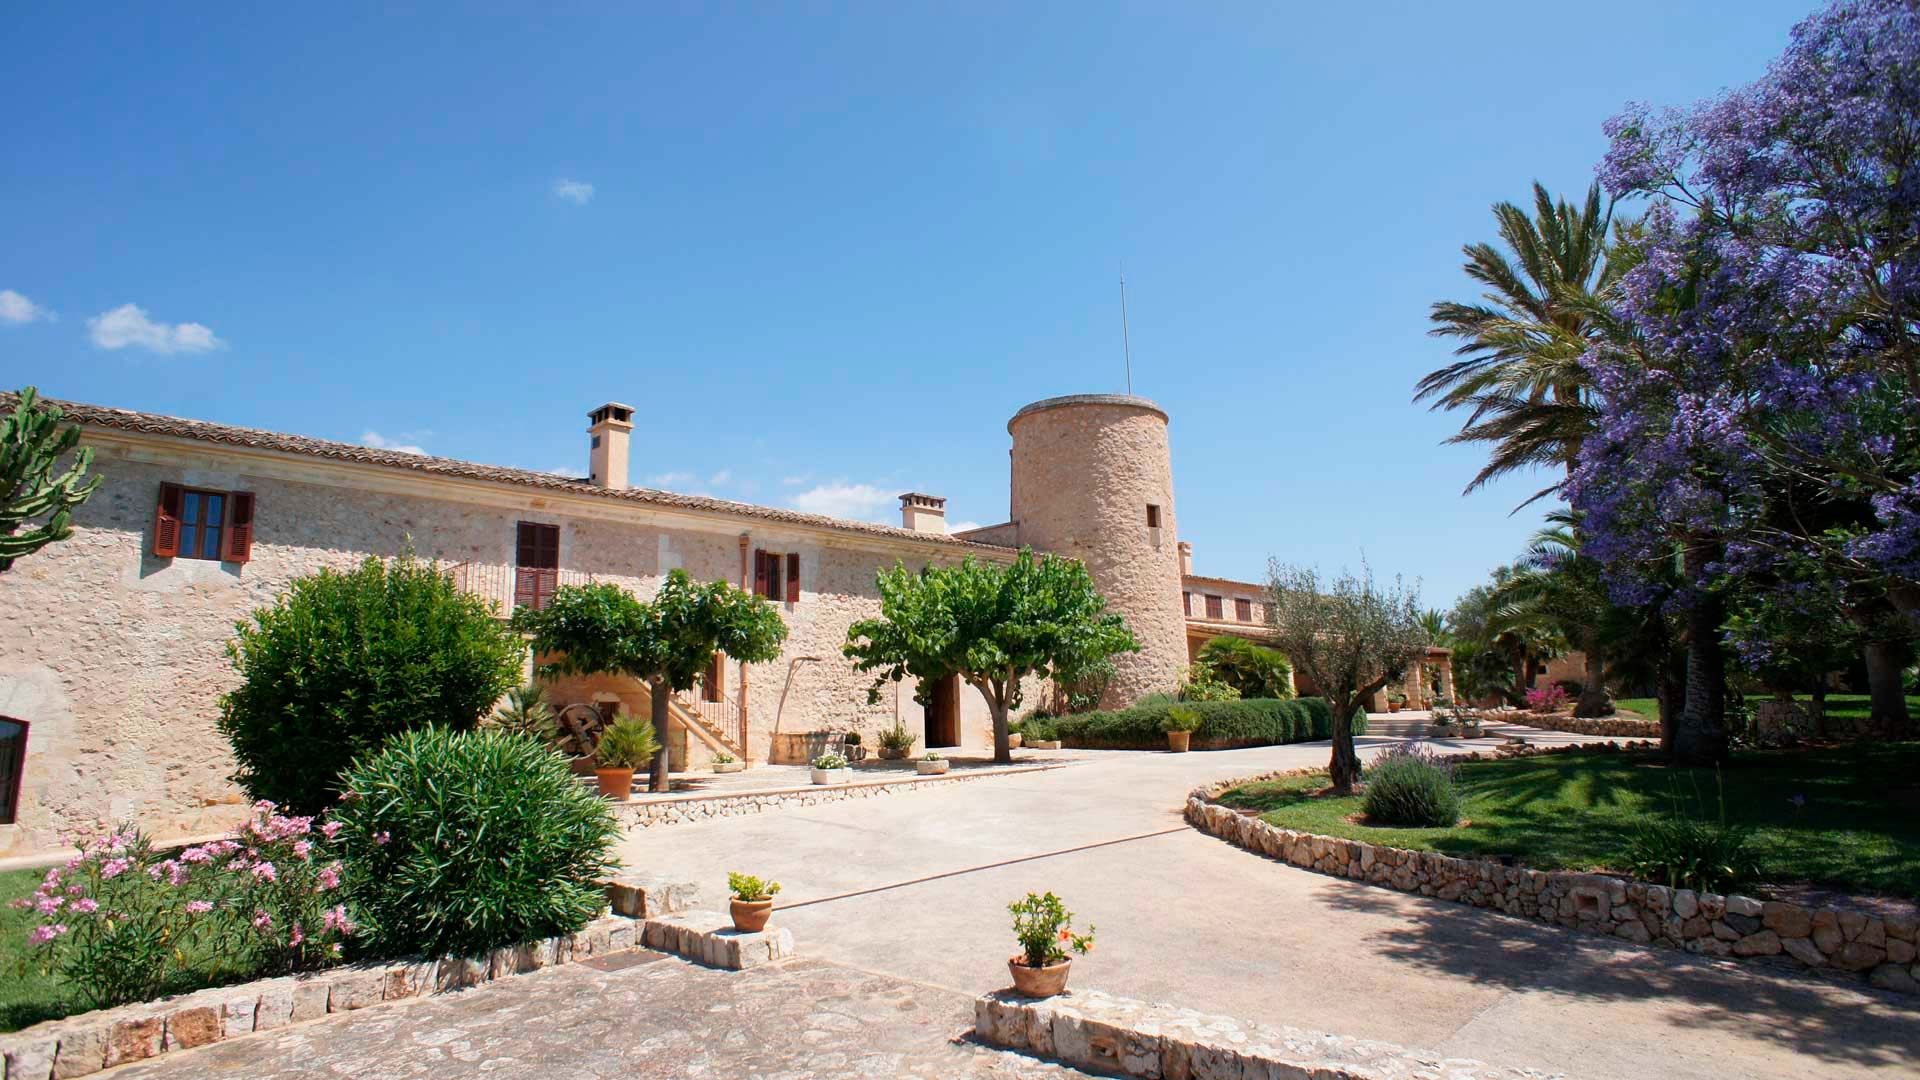 Hotel Rural de Lujo en Mallorca